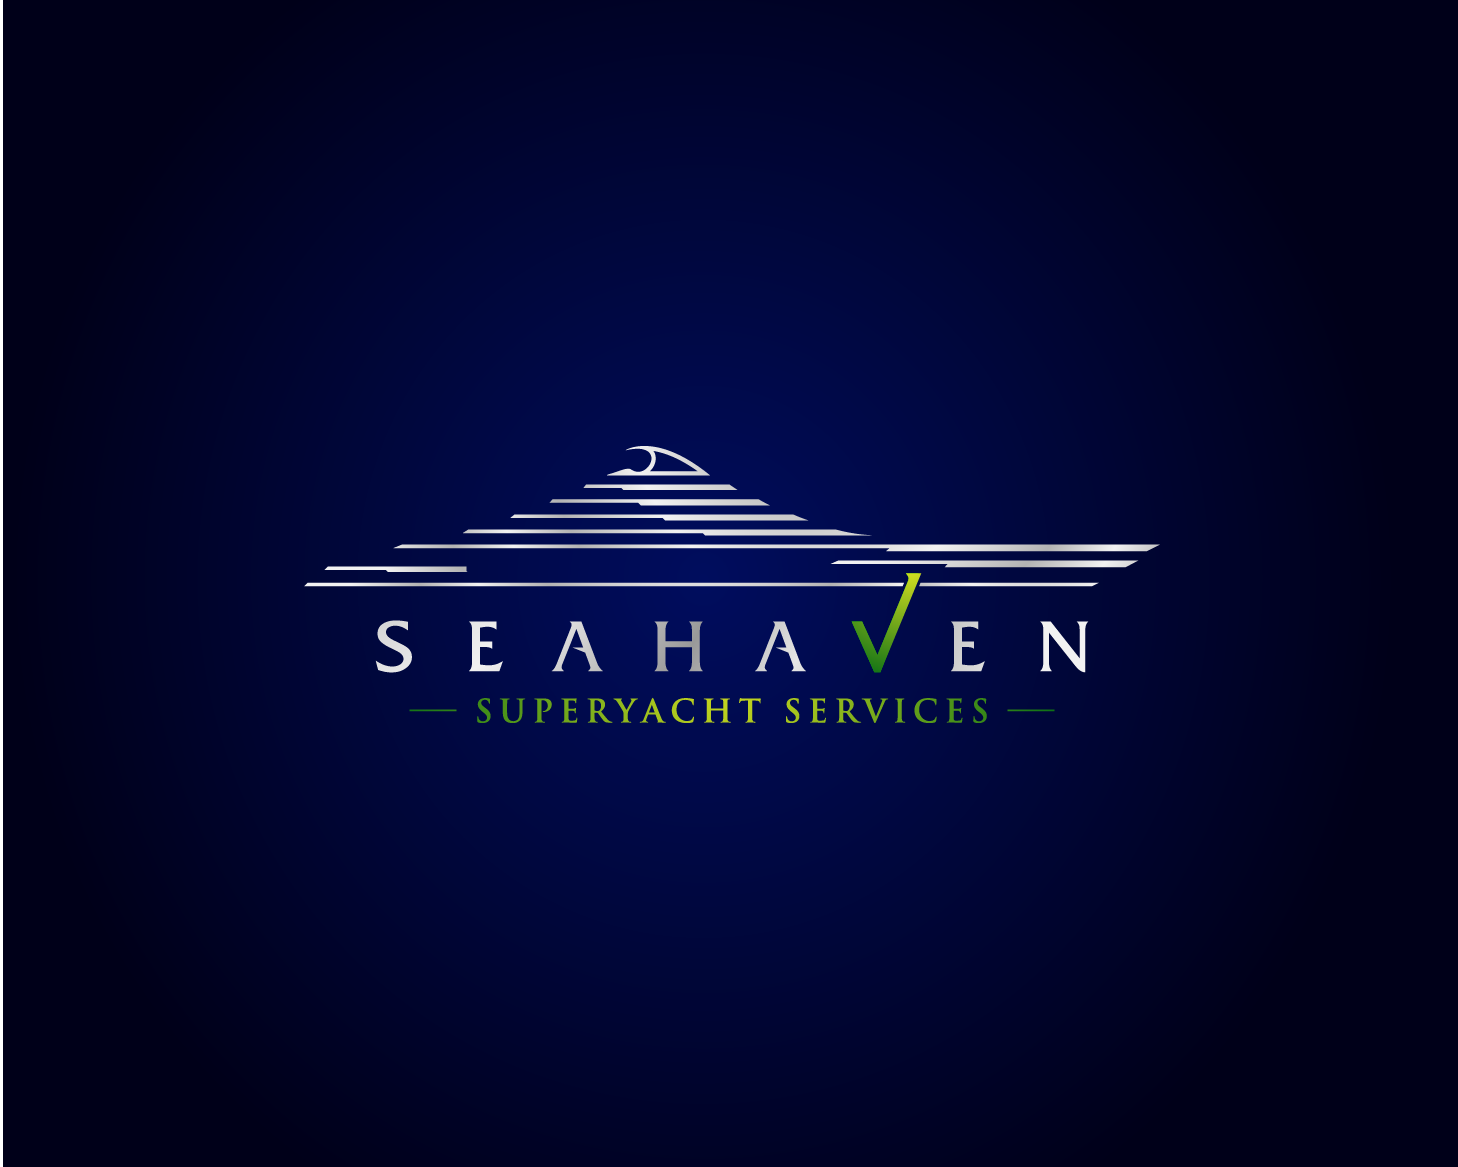 Seahaven Superyacht Services